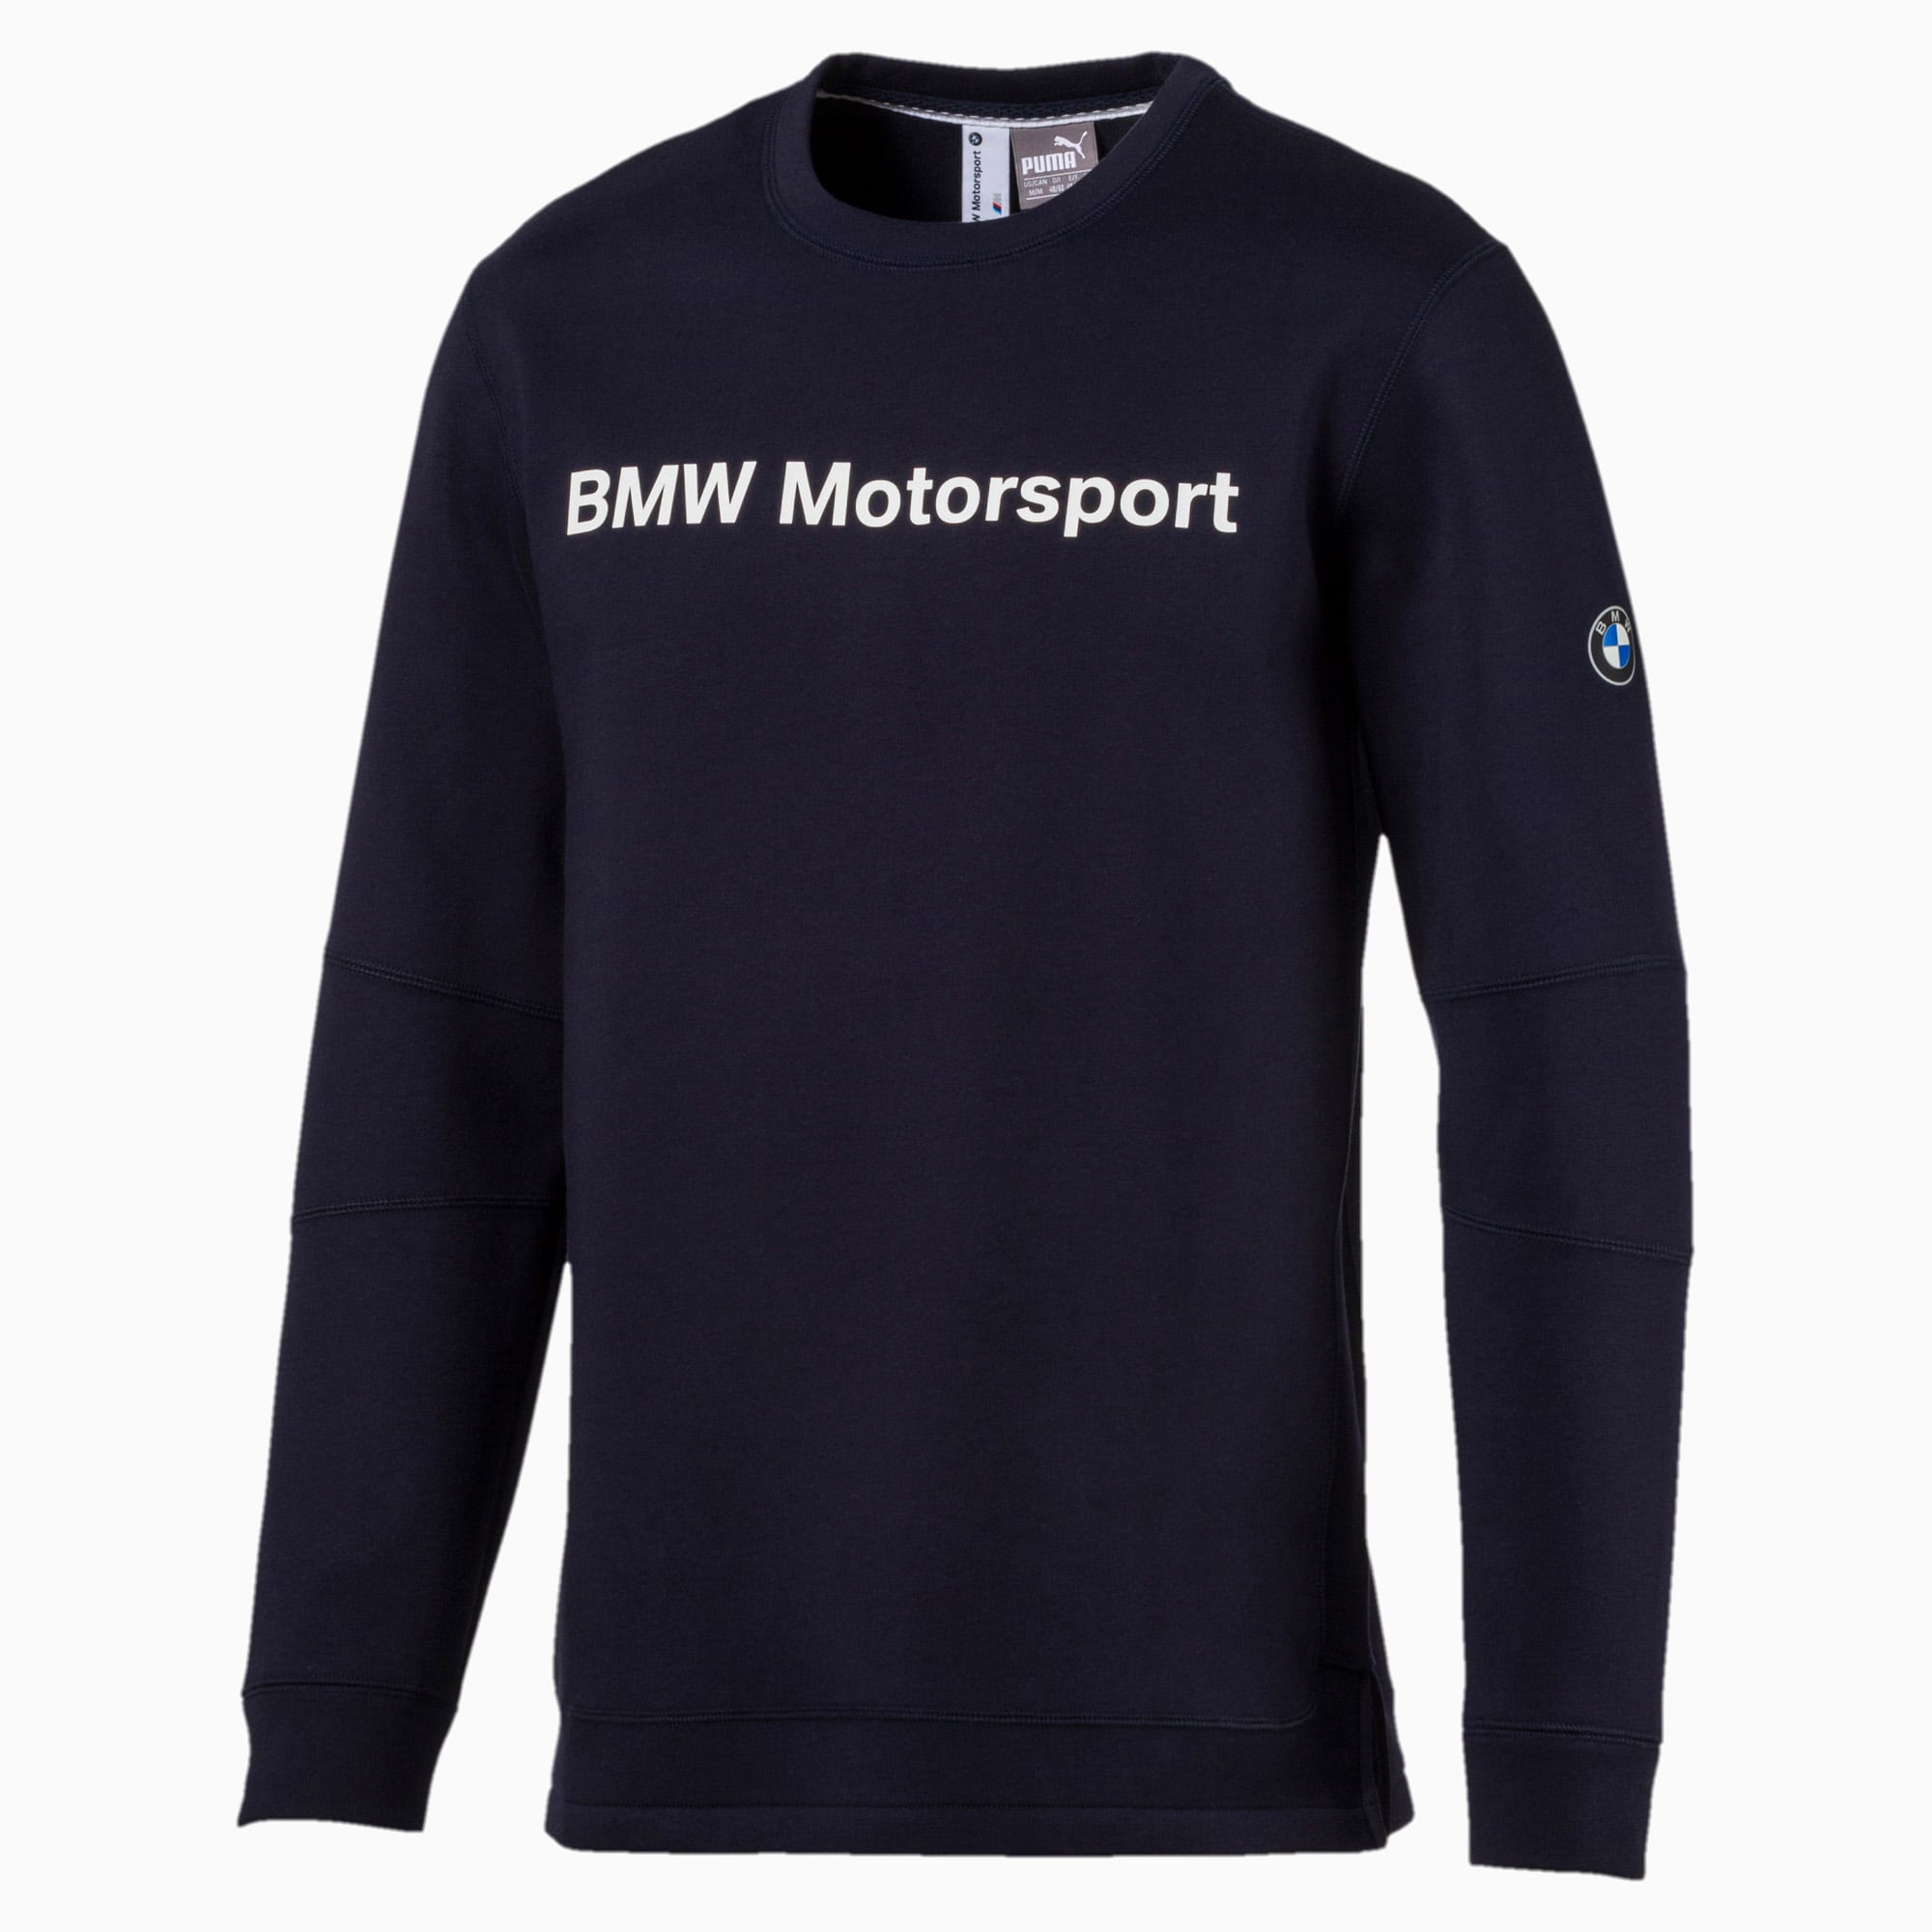 puma bmw motorsport sweater